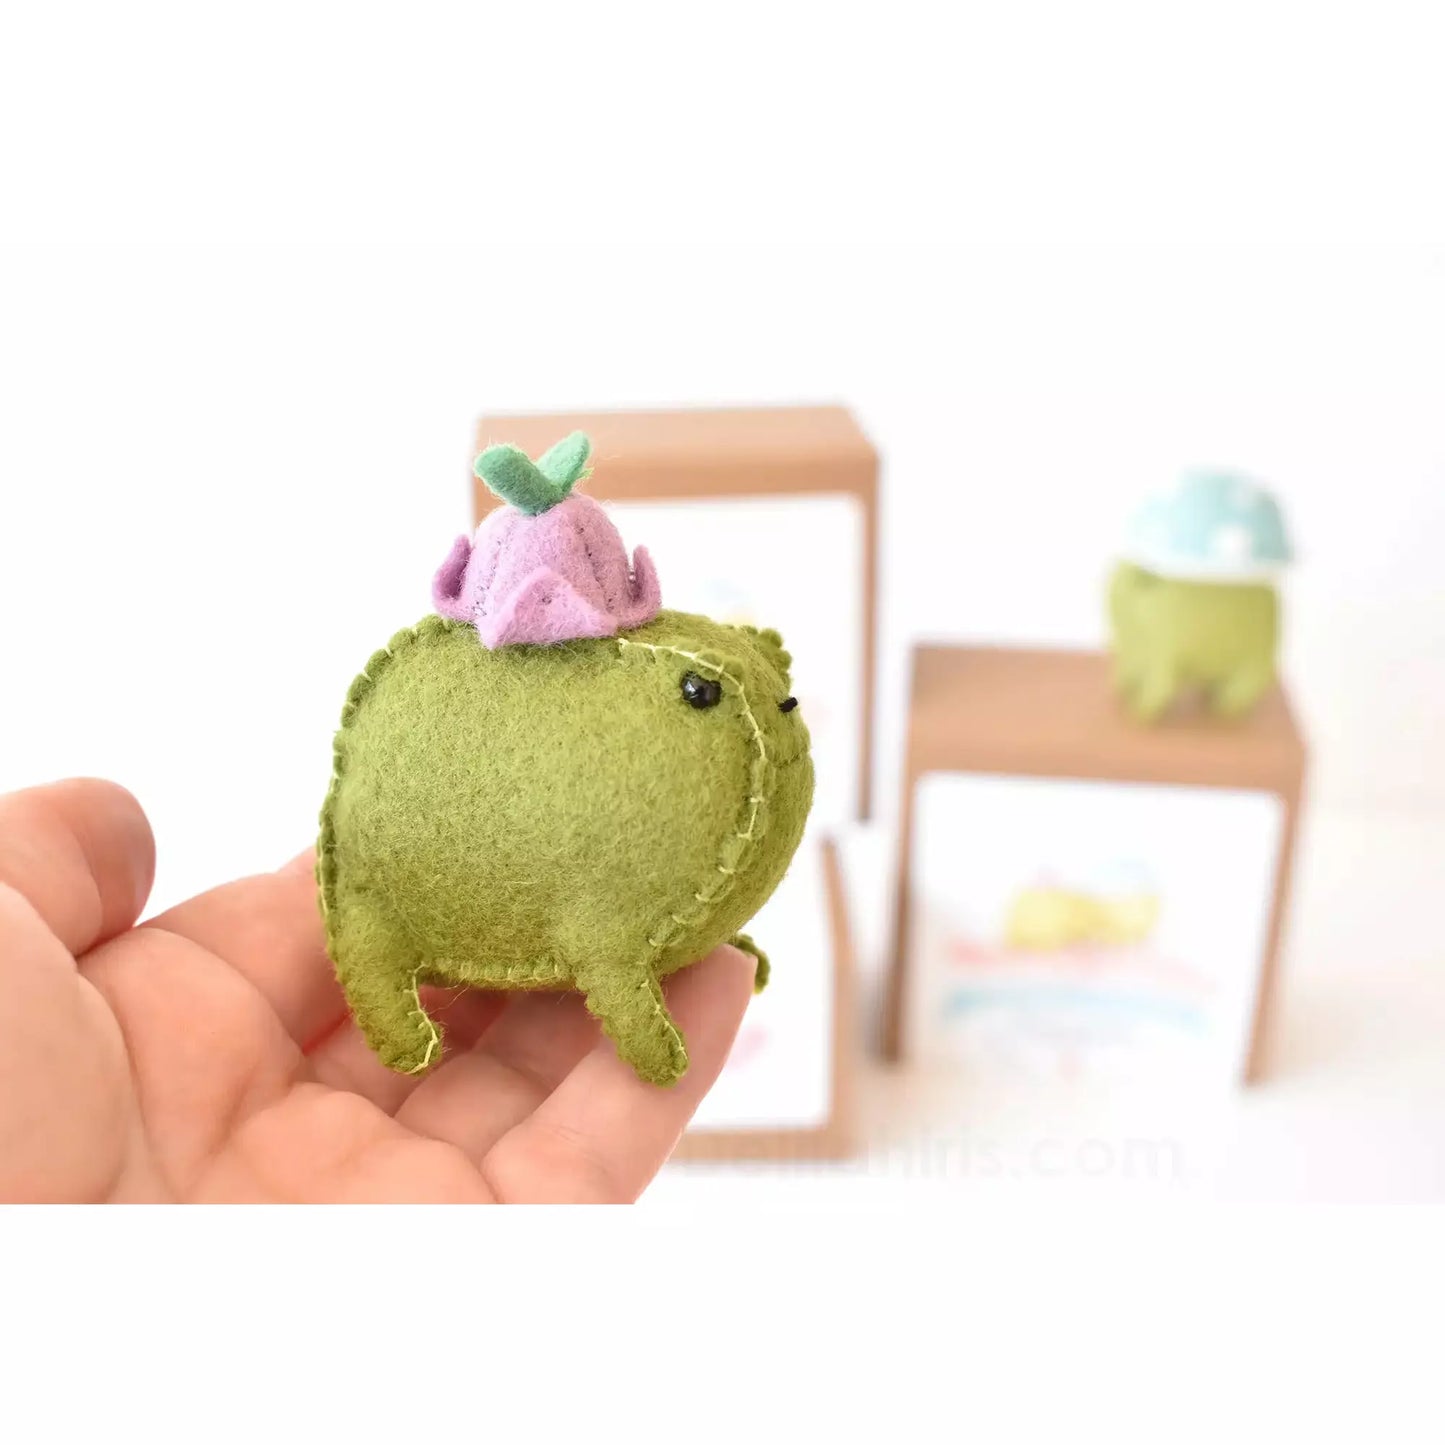 DelilahIris Designs ~ Felt Frog Sewing Kit ~ Mushroom and Flower Bud